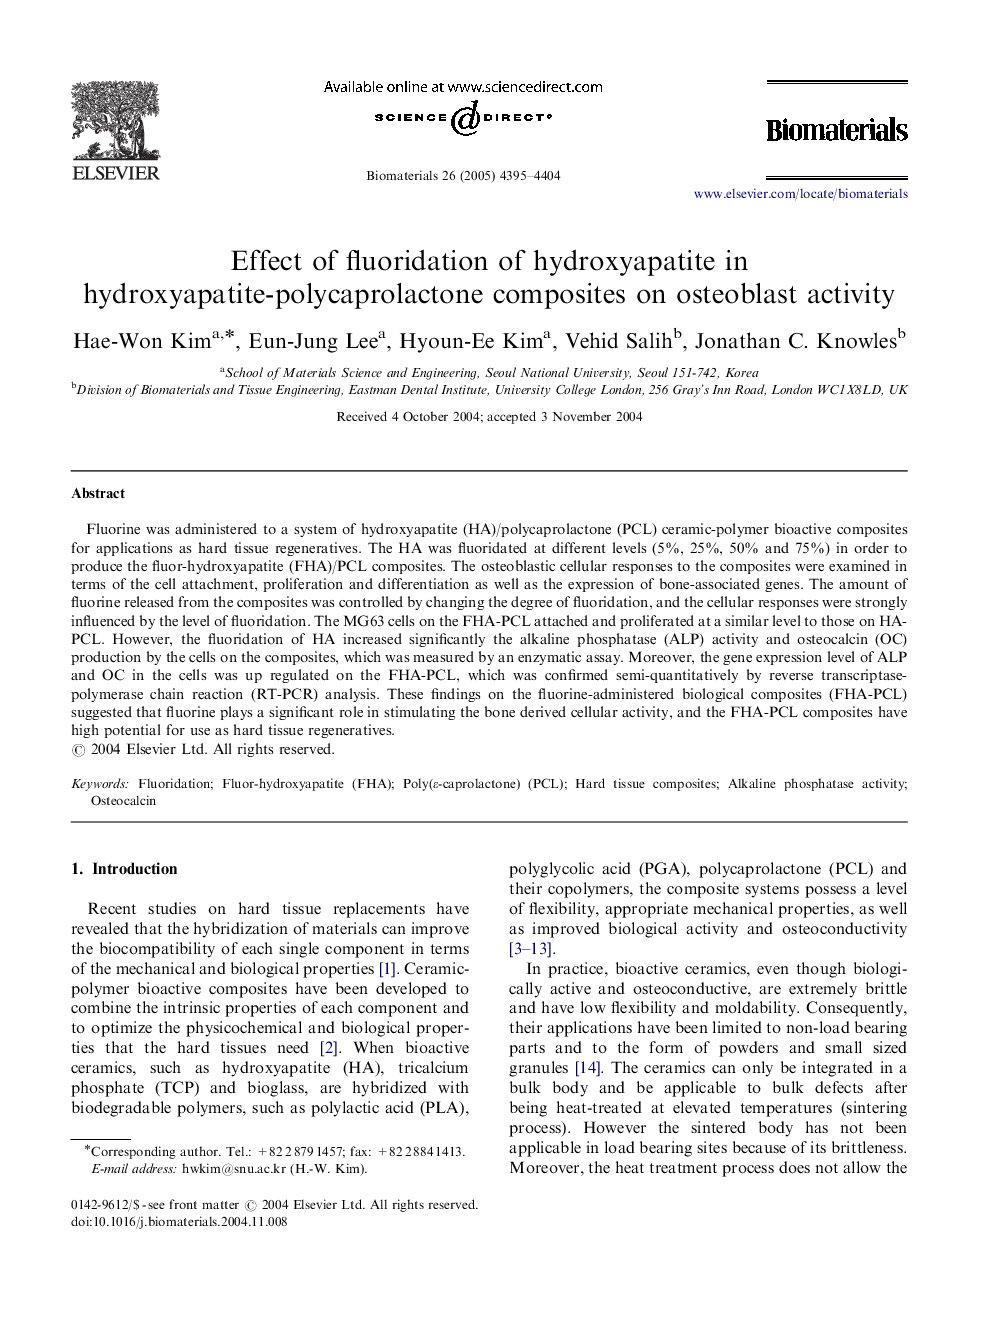 Effect of fluoridation of hydroxyapatite in hydroxyapatite-polycaprolactone composites on osteoblast activity